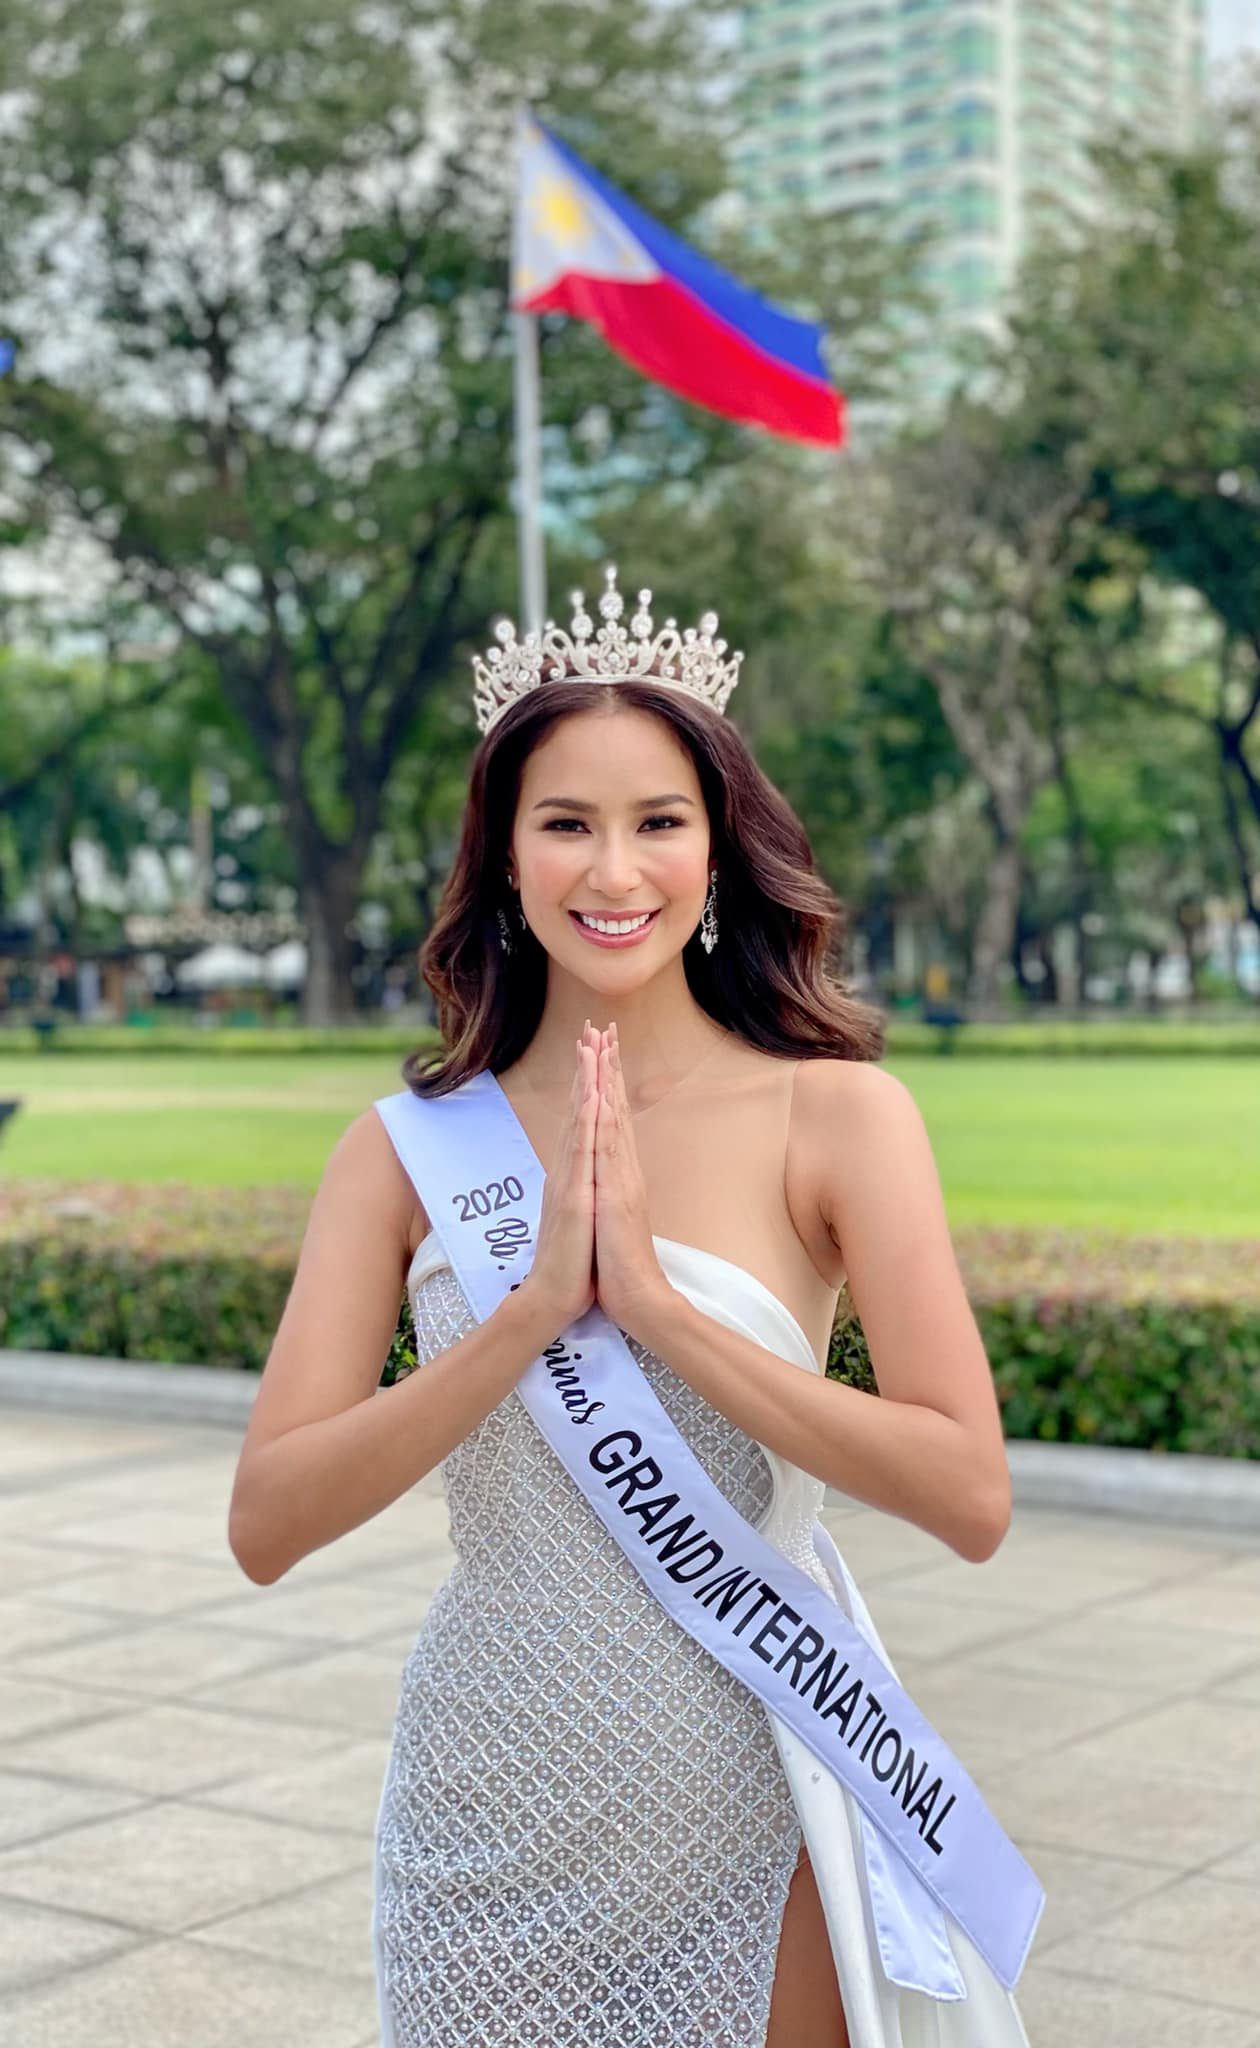 IN PHOTOS Samantha Bernardo S Journey To The Miss Grand International Philippines Crown